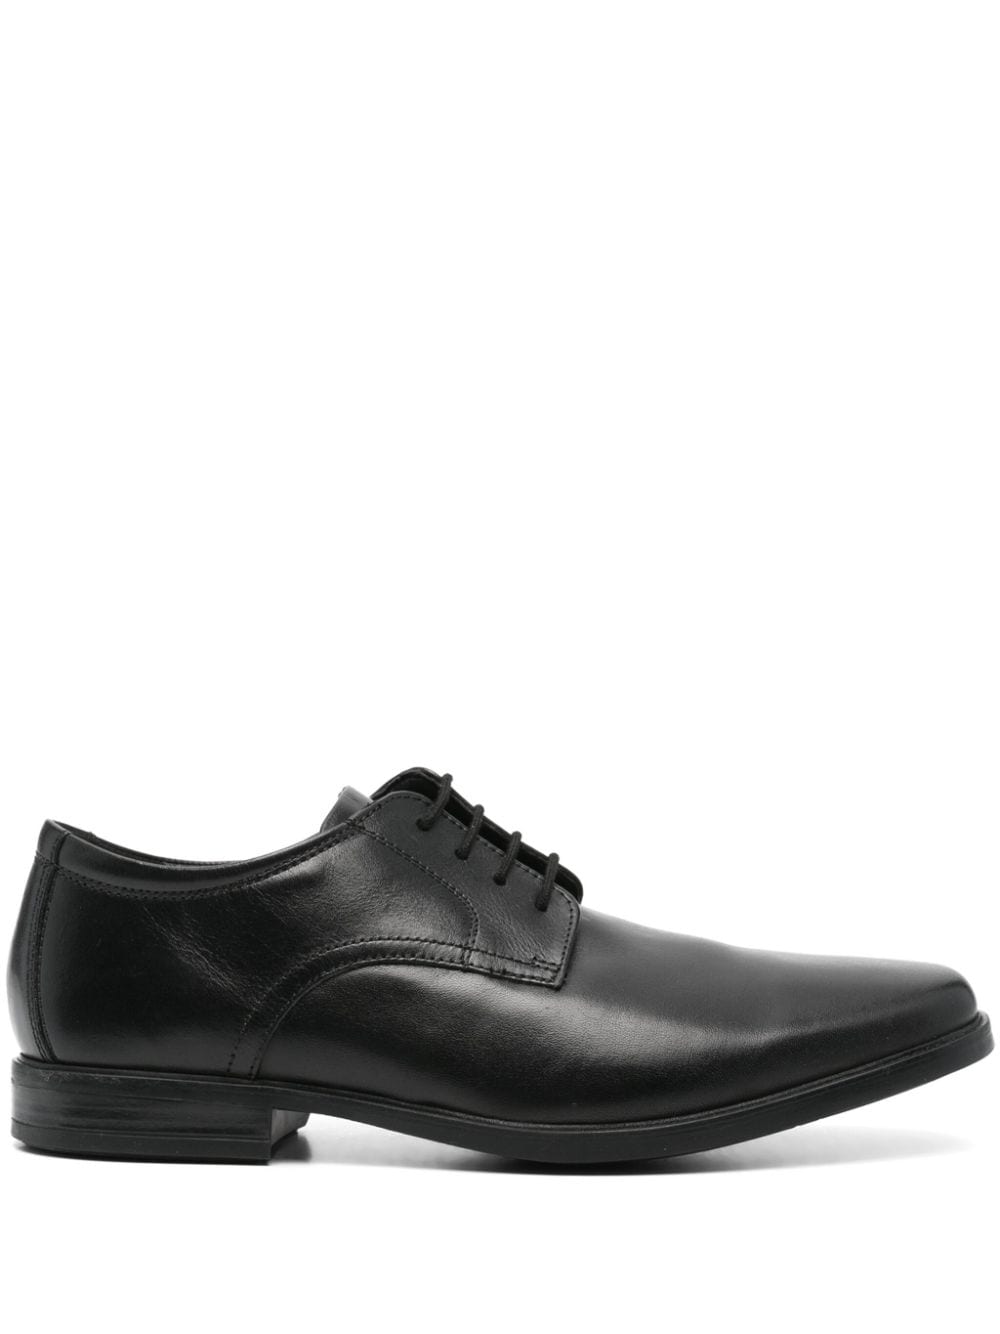 Clarks Howard Walk Leather Shoes In Black